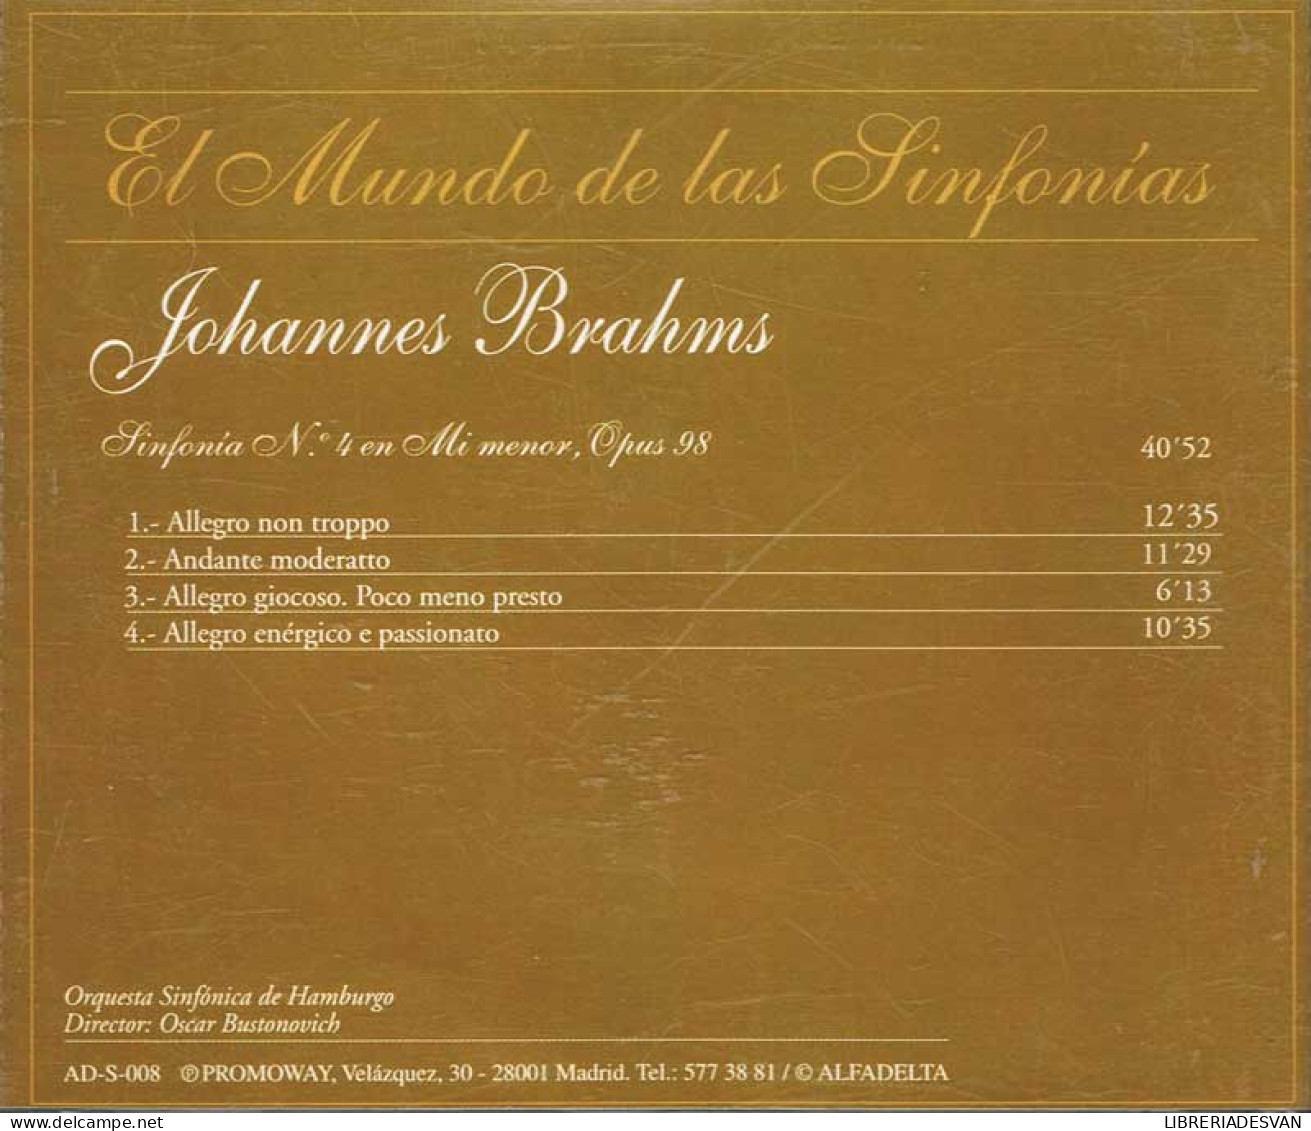 Johannes Brahms - Sinfonía Nº 4 En Mi Menor, Opus 98. CD - Classical